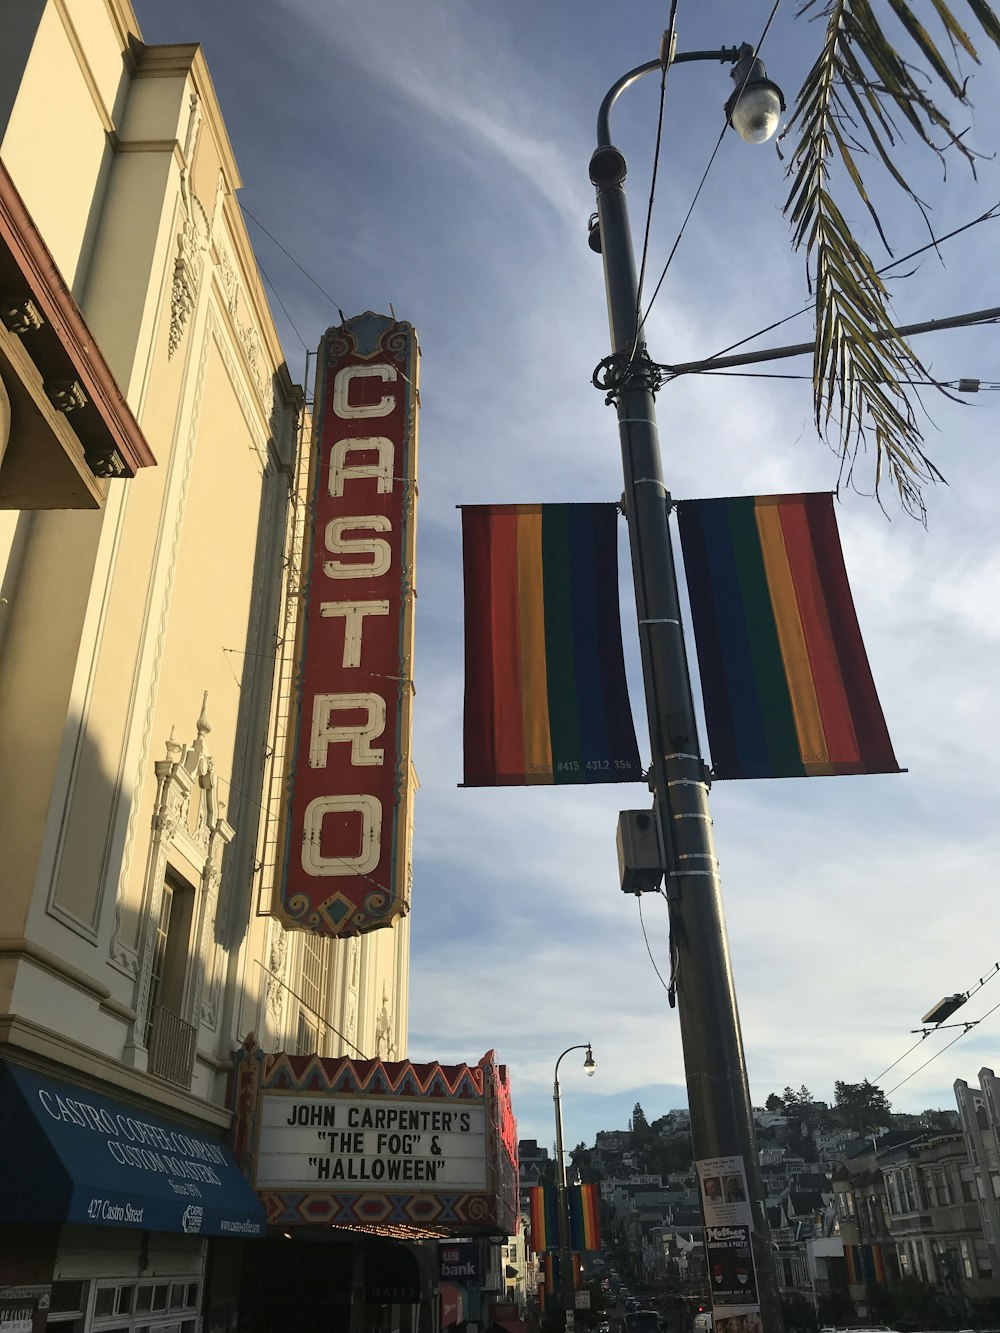 Castro signage near street post